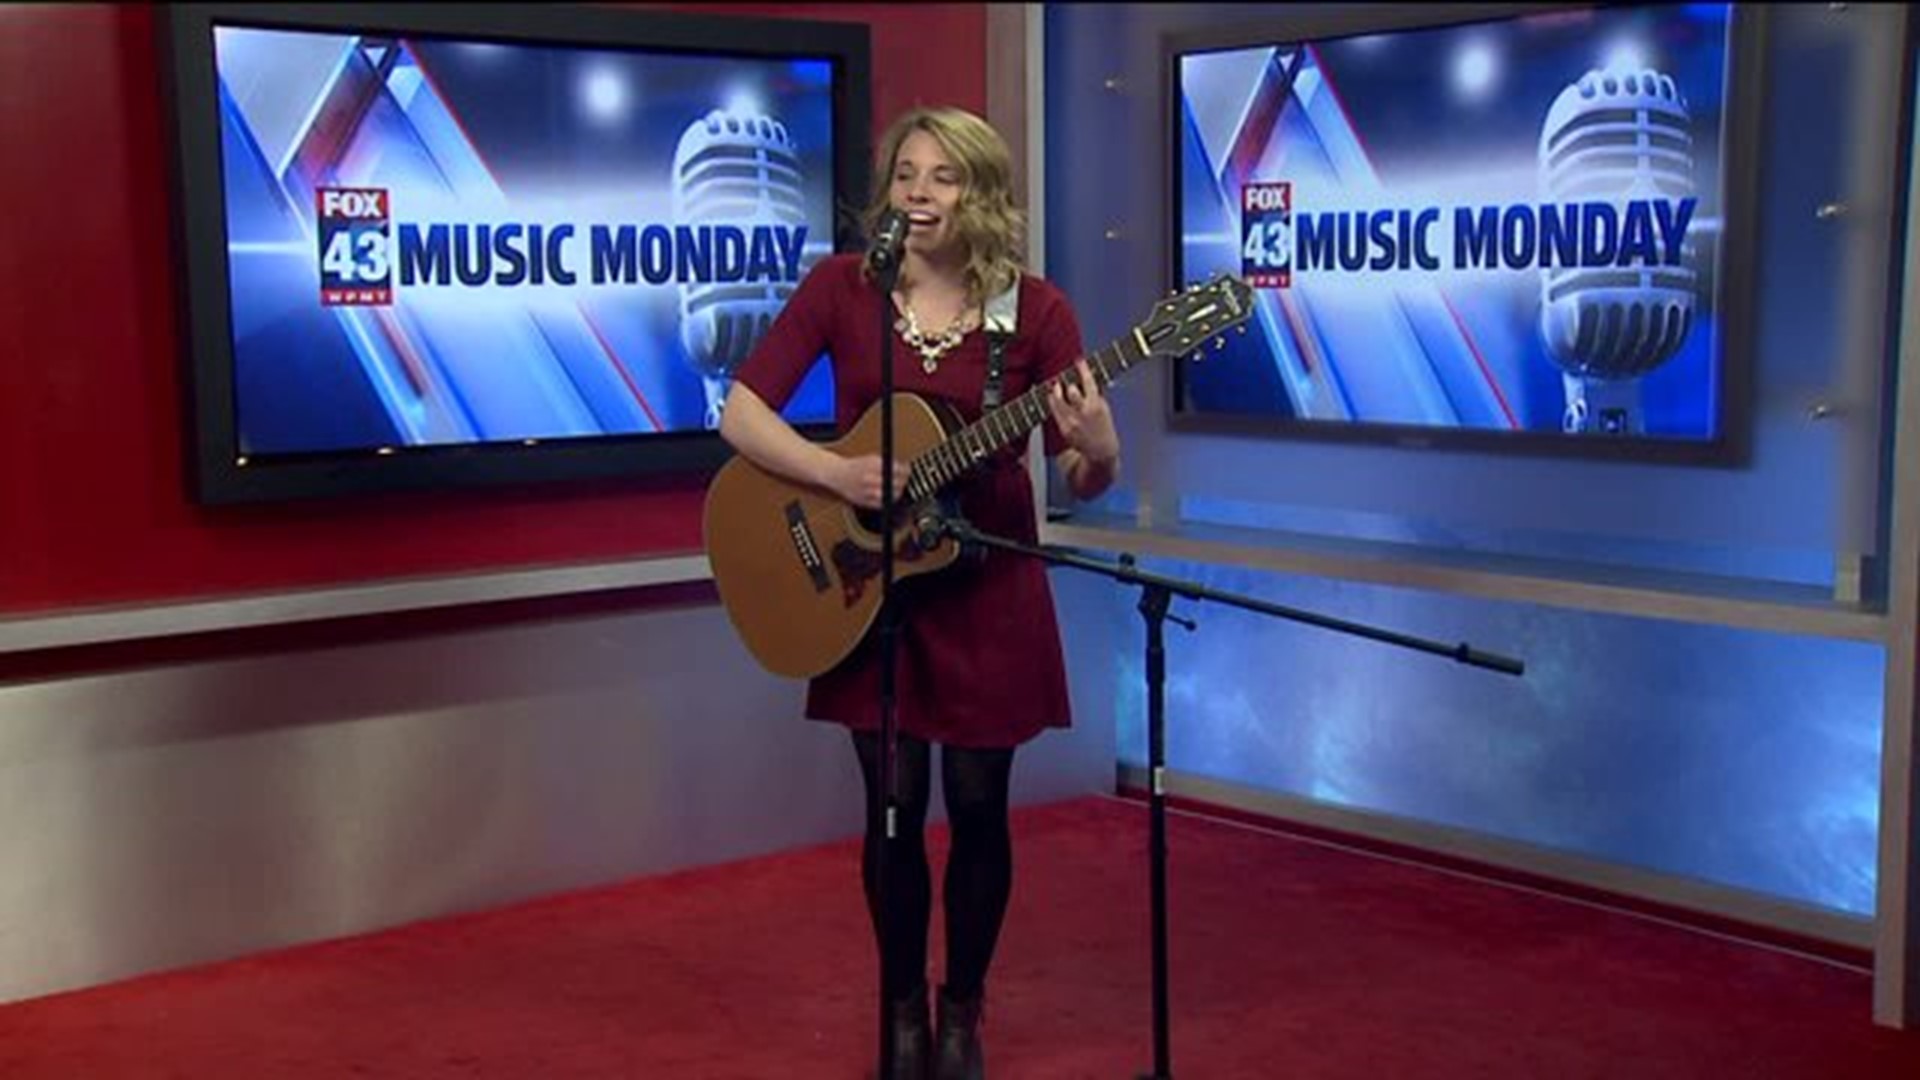 FOX43 Music Monday: Olivia Farabaugh